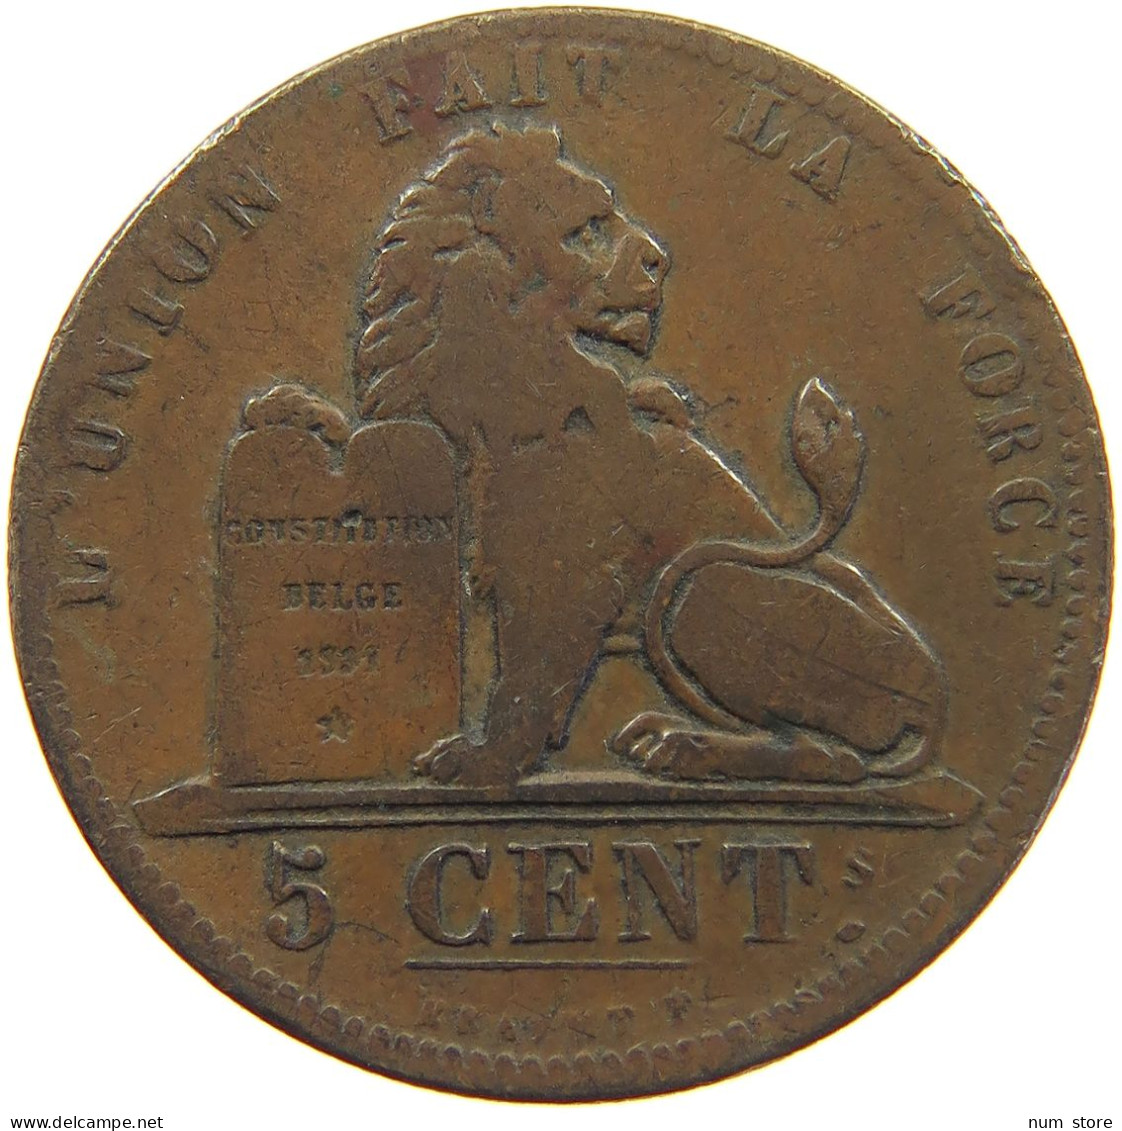 BELGIUM 5 CENTIMES 1847 Leopold I. (1831-1865) PLANCHET ERROR #c018 0143 - 5 Centimes